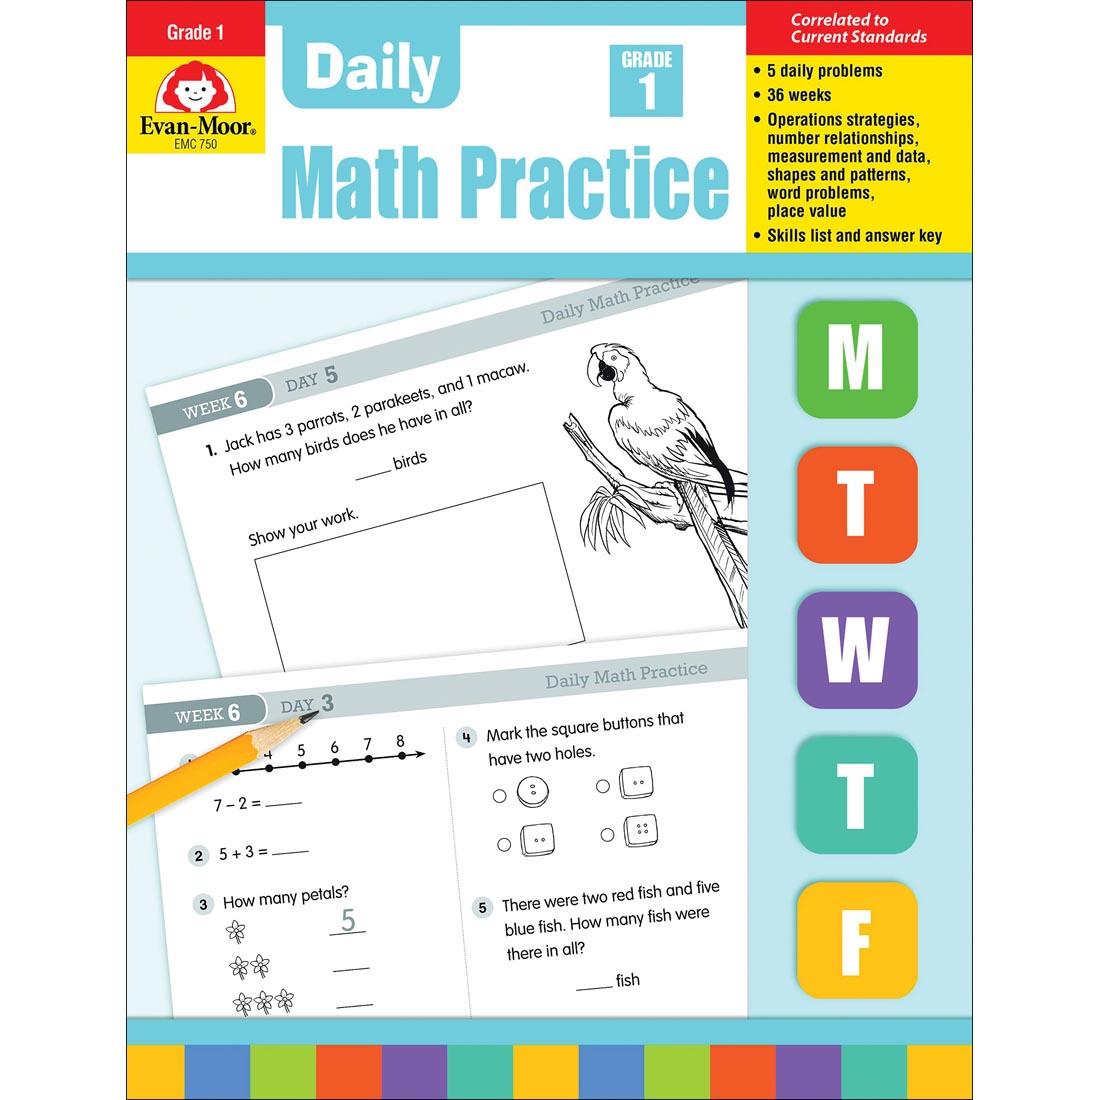 Daily Math Practice by Evan-Moor Grade 1